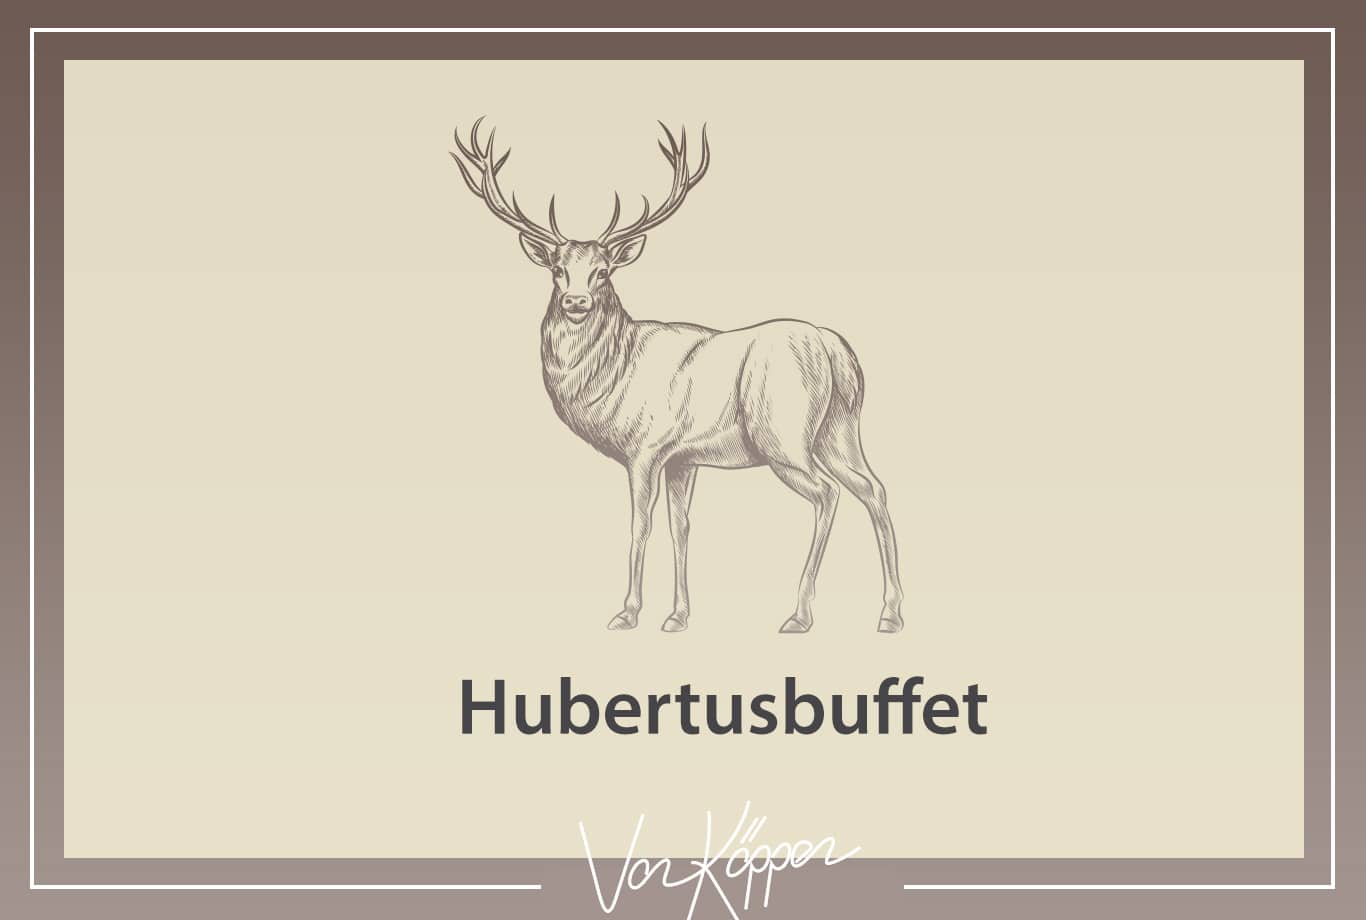 Hubertusbuffet